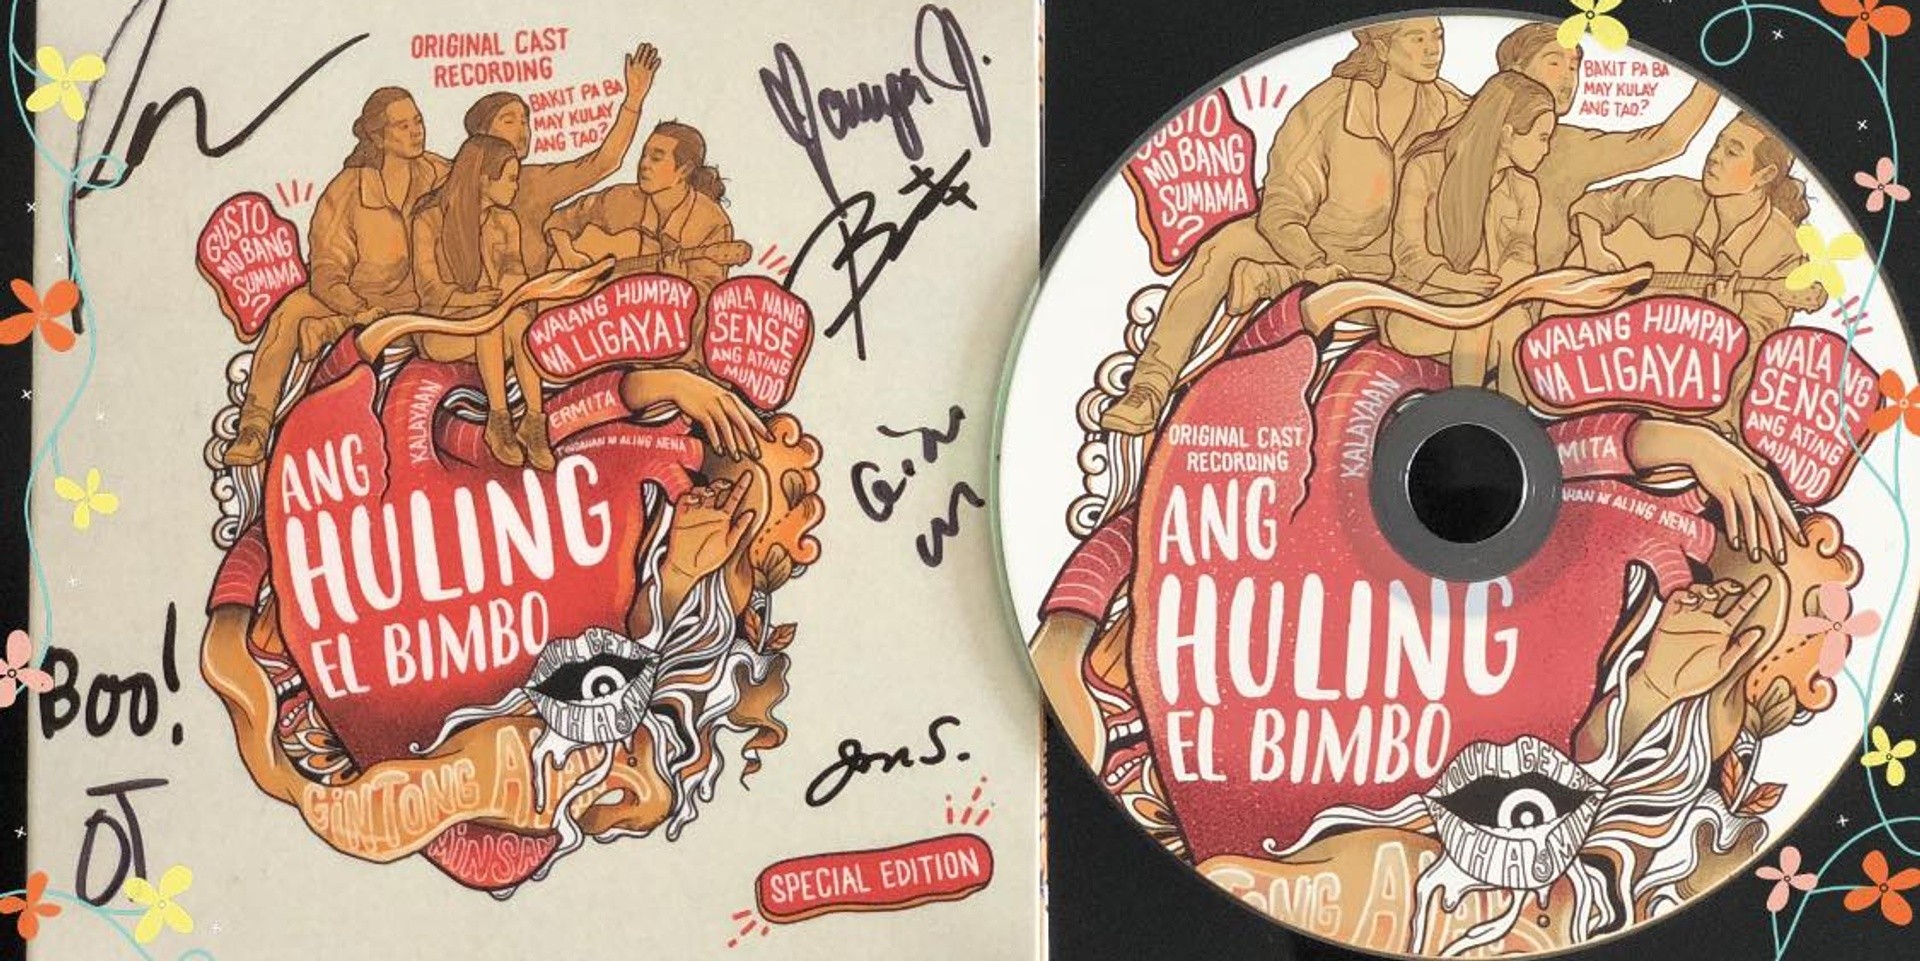 Ang Huling El Bimbo the Musical to release original cast recording